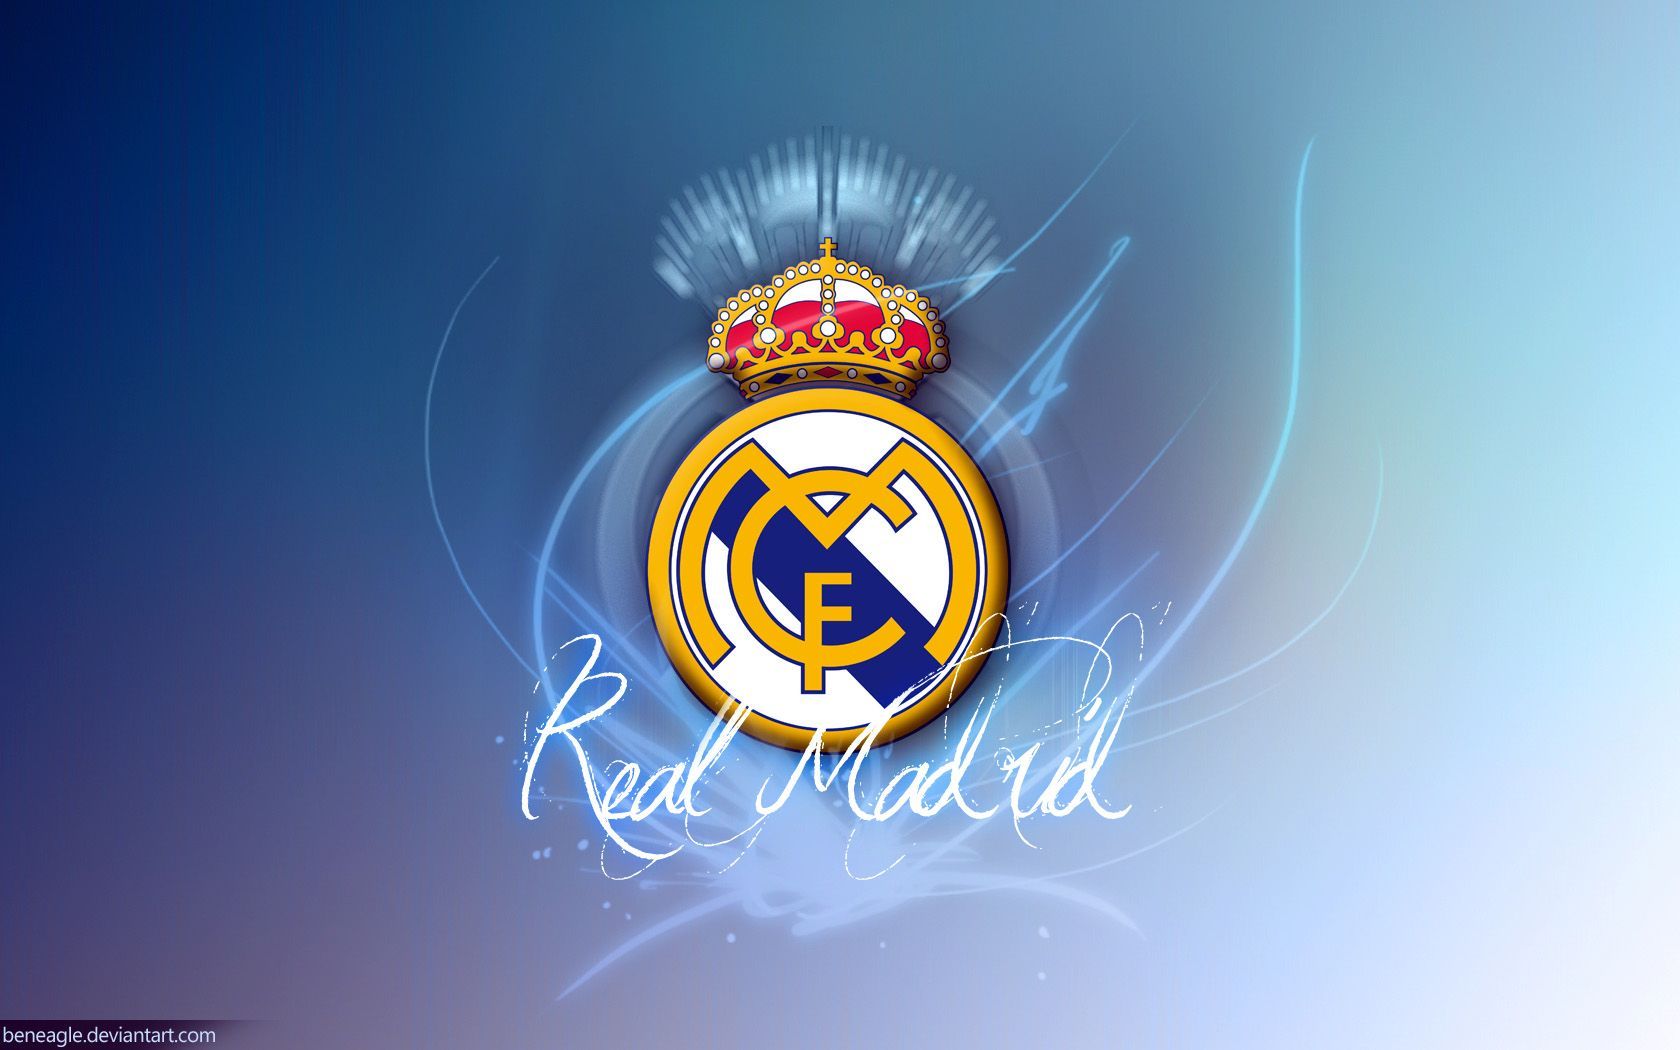 real madrid logo. Real madrid logo wallpaper, Real madrid logo